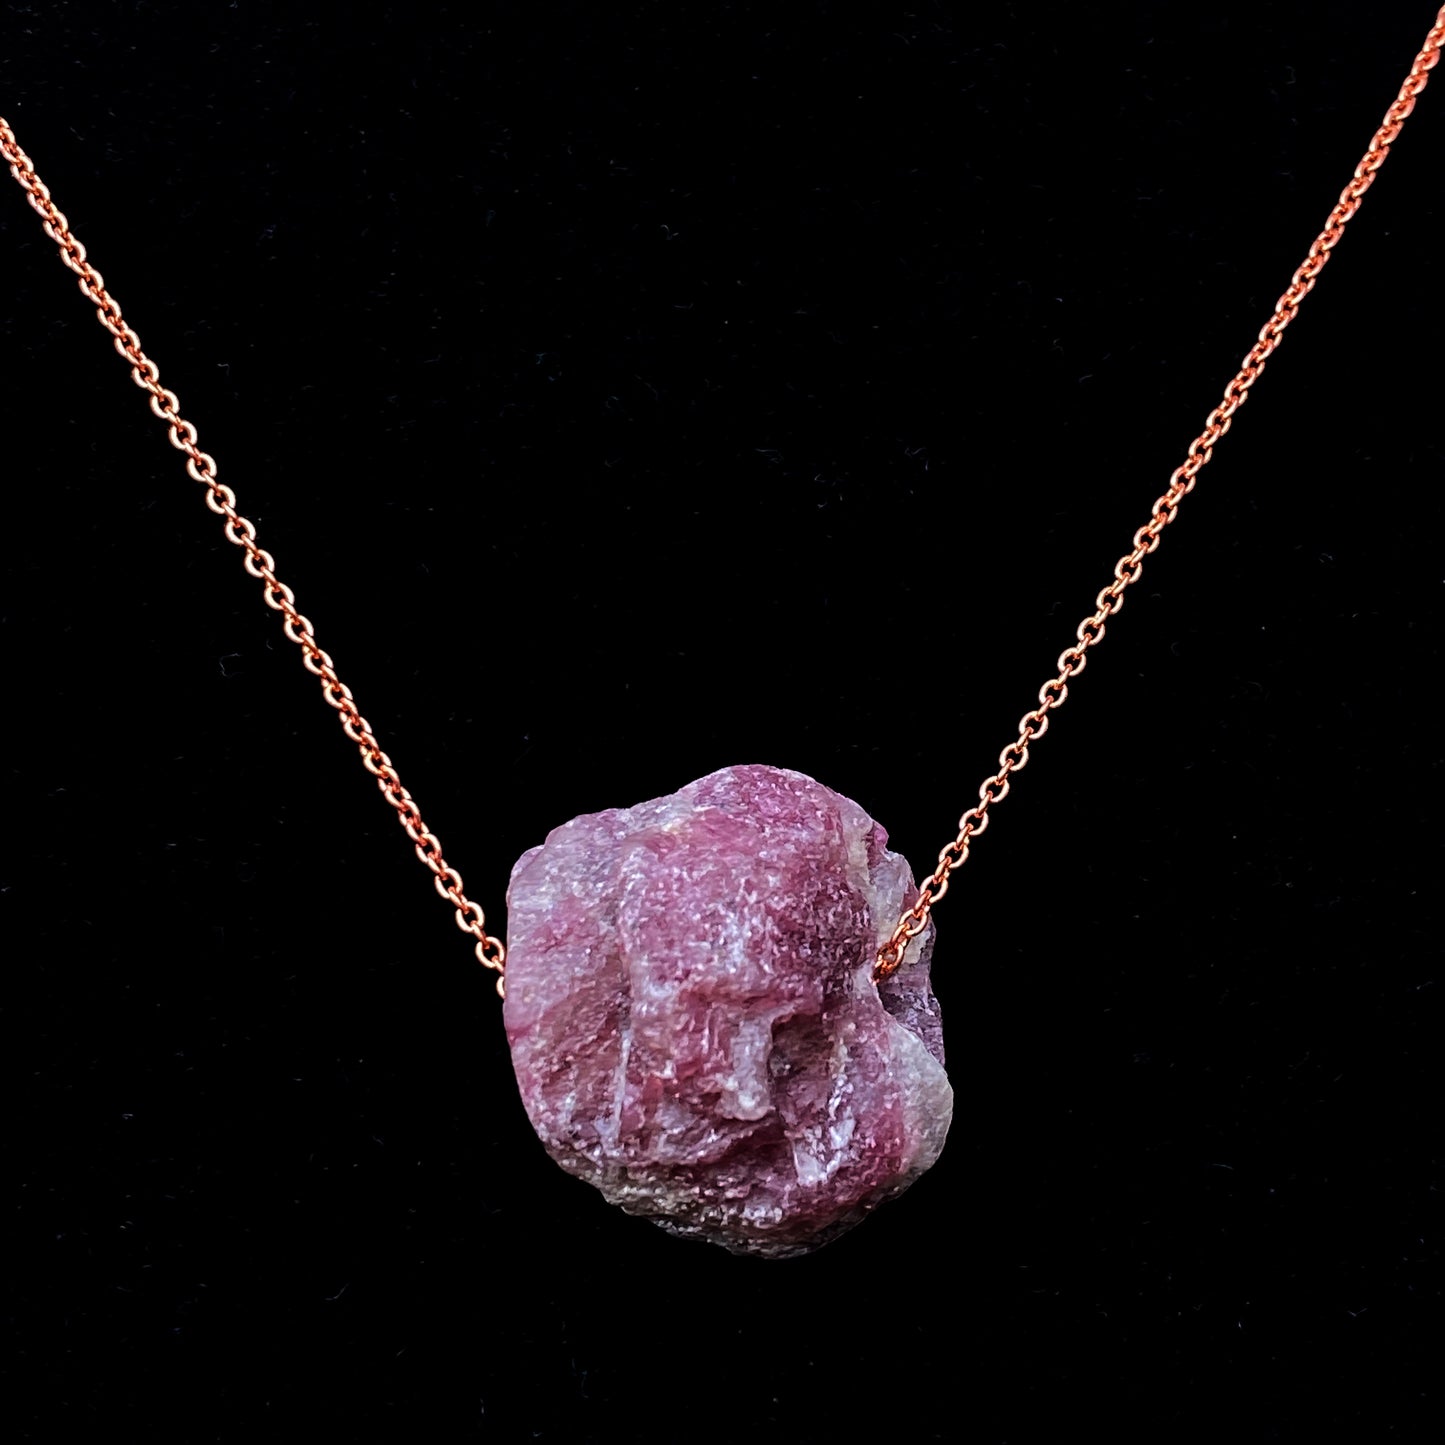 Strawberry Quartz gemstone with Copper Chain Choker